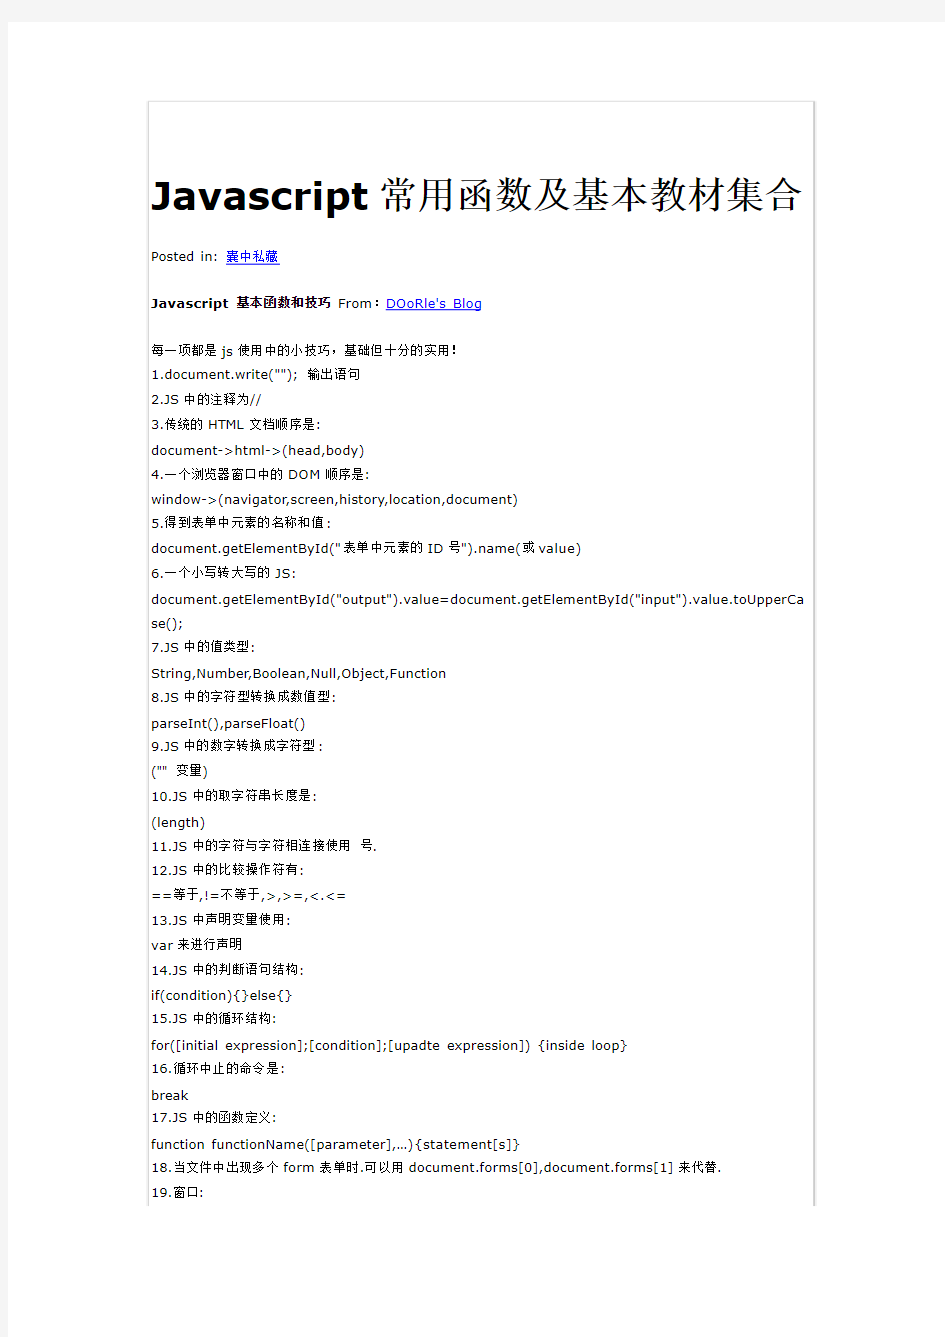 Javascript常用函数及基本教材集合